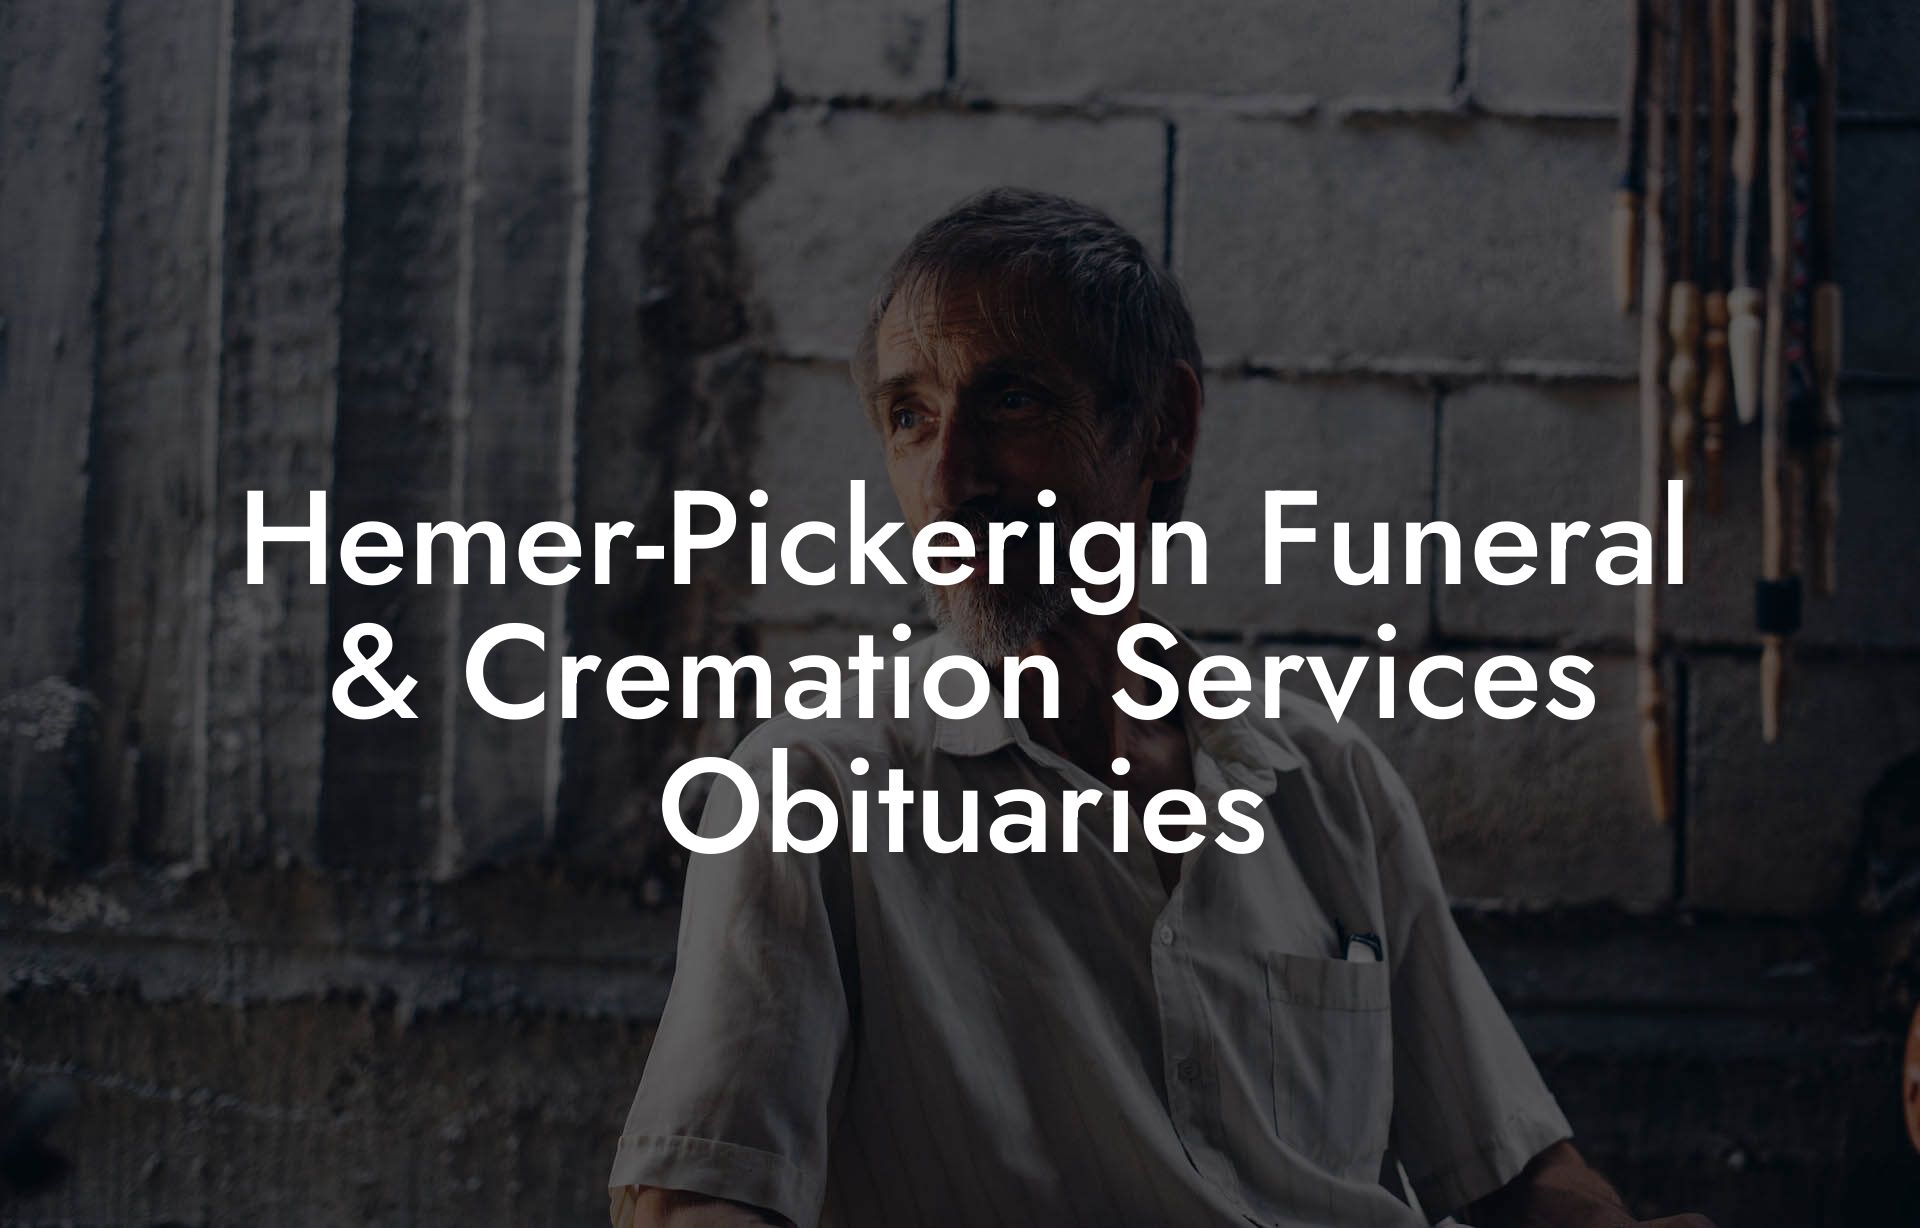 Hemer-Pickerign Funeral & Cremation Services Obituaries